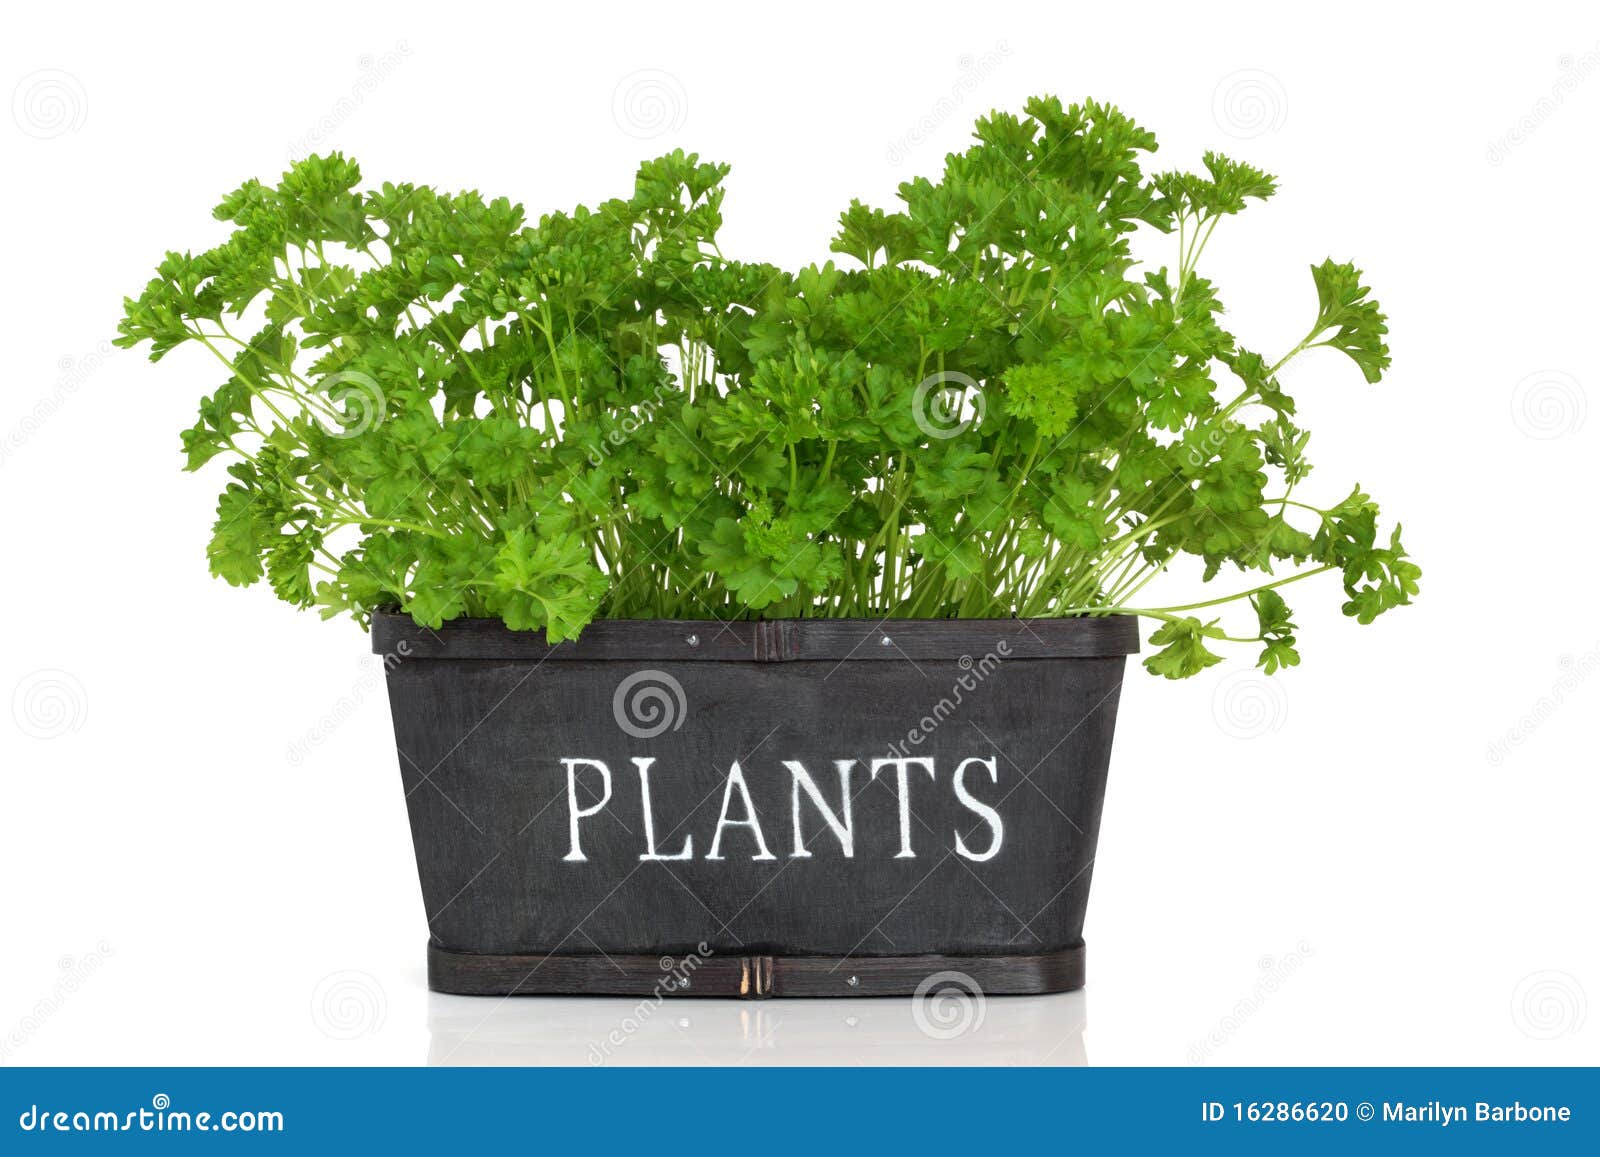 parsley herb plant